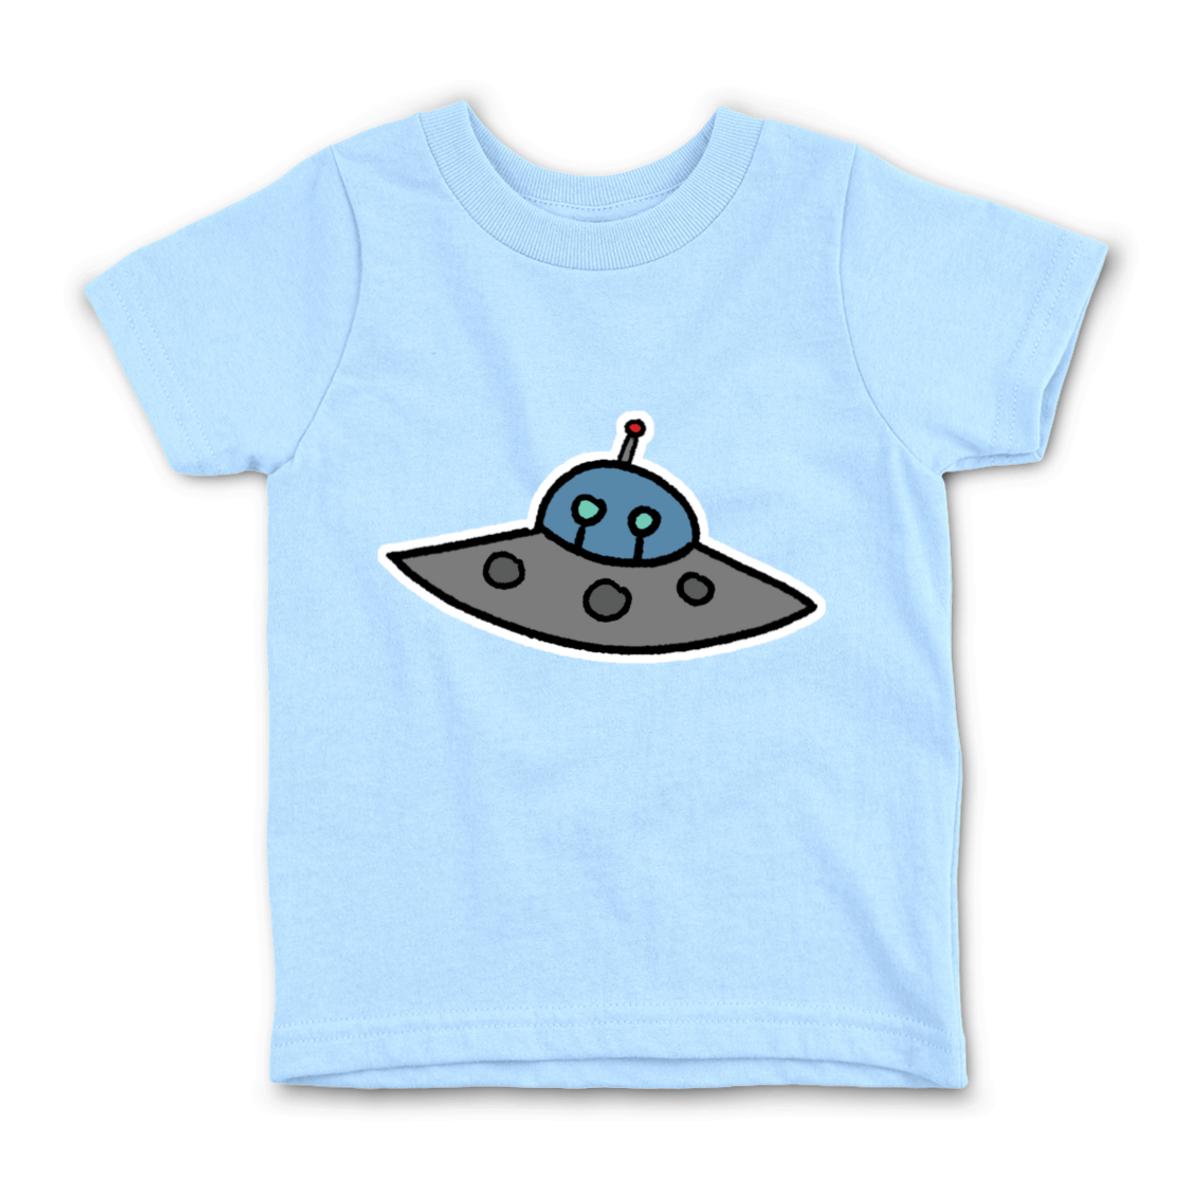 Flying Saucer Kid's Tee Large light-blue